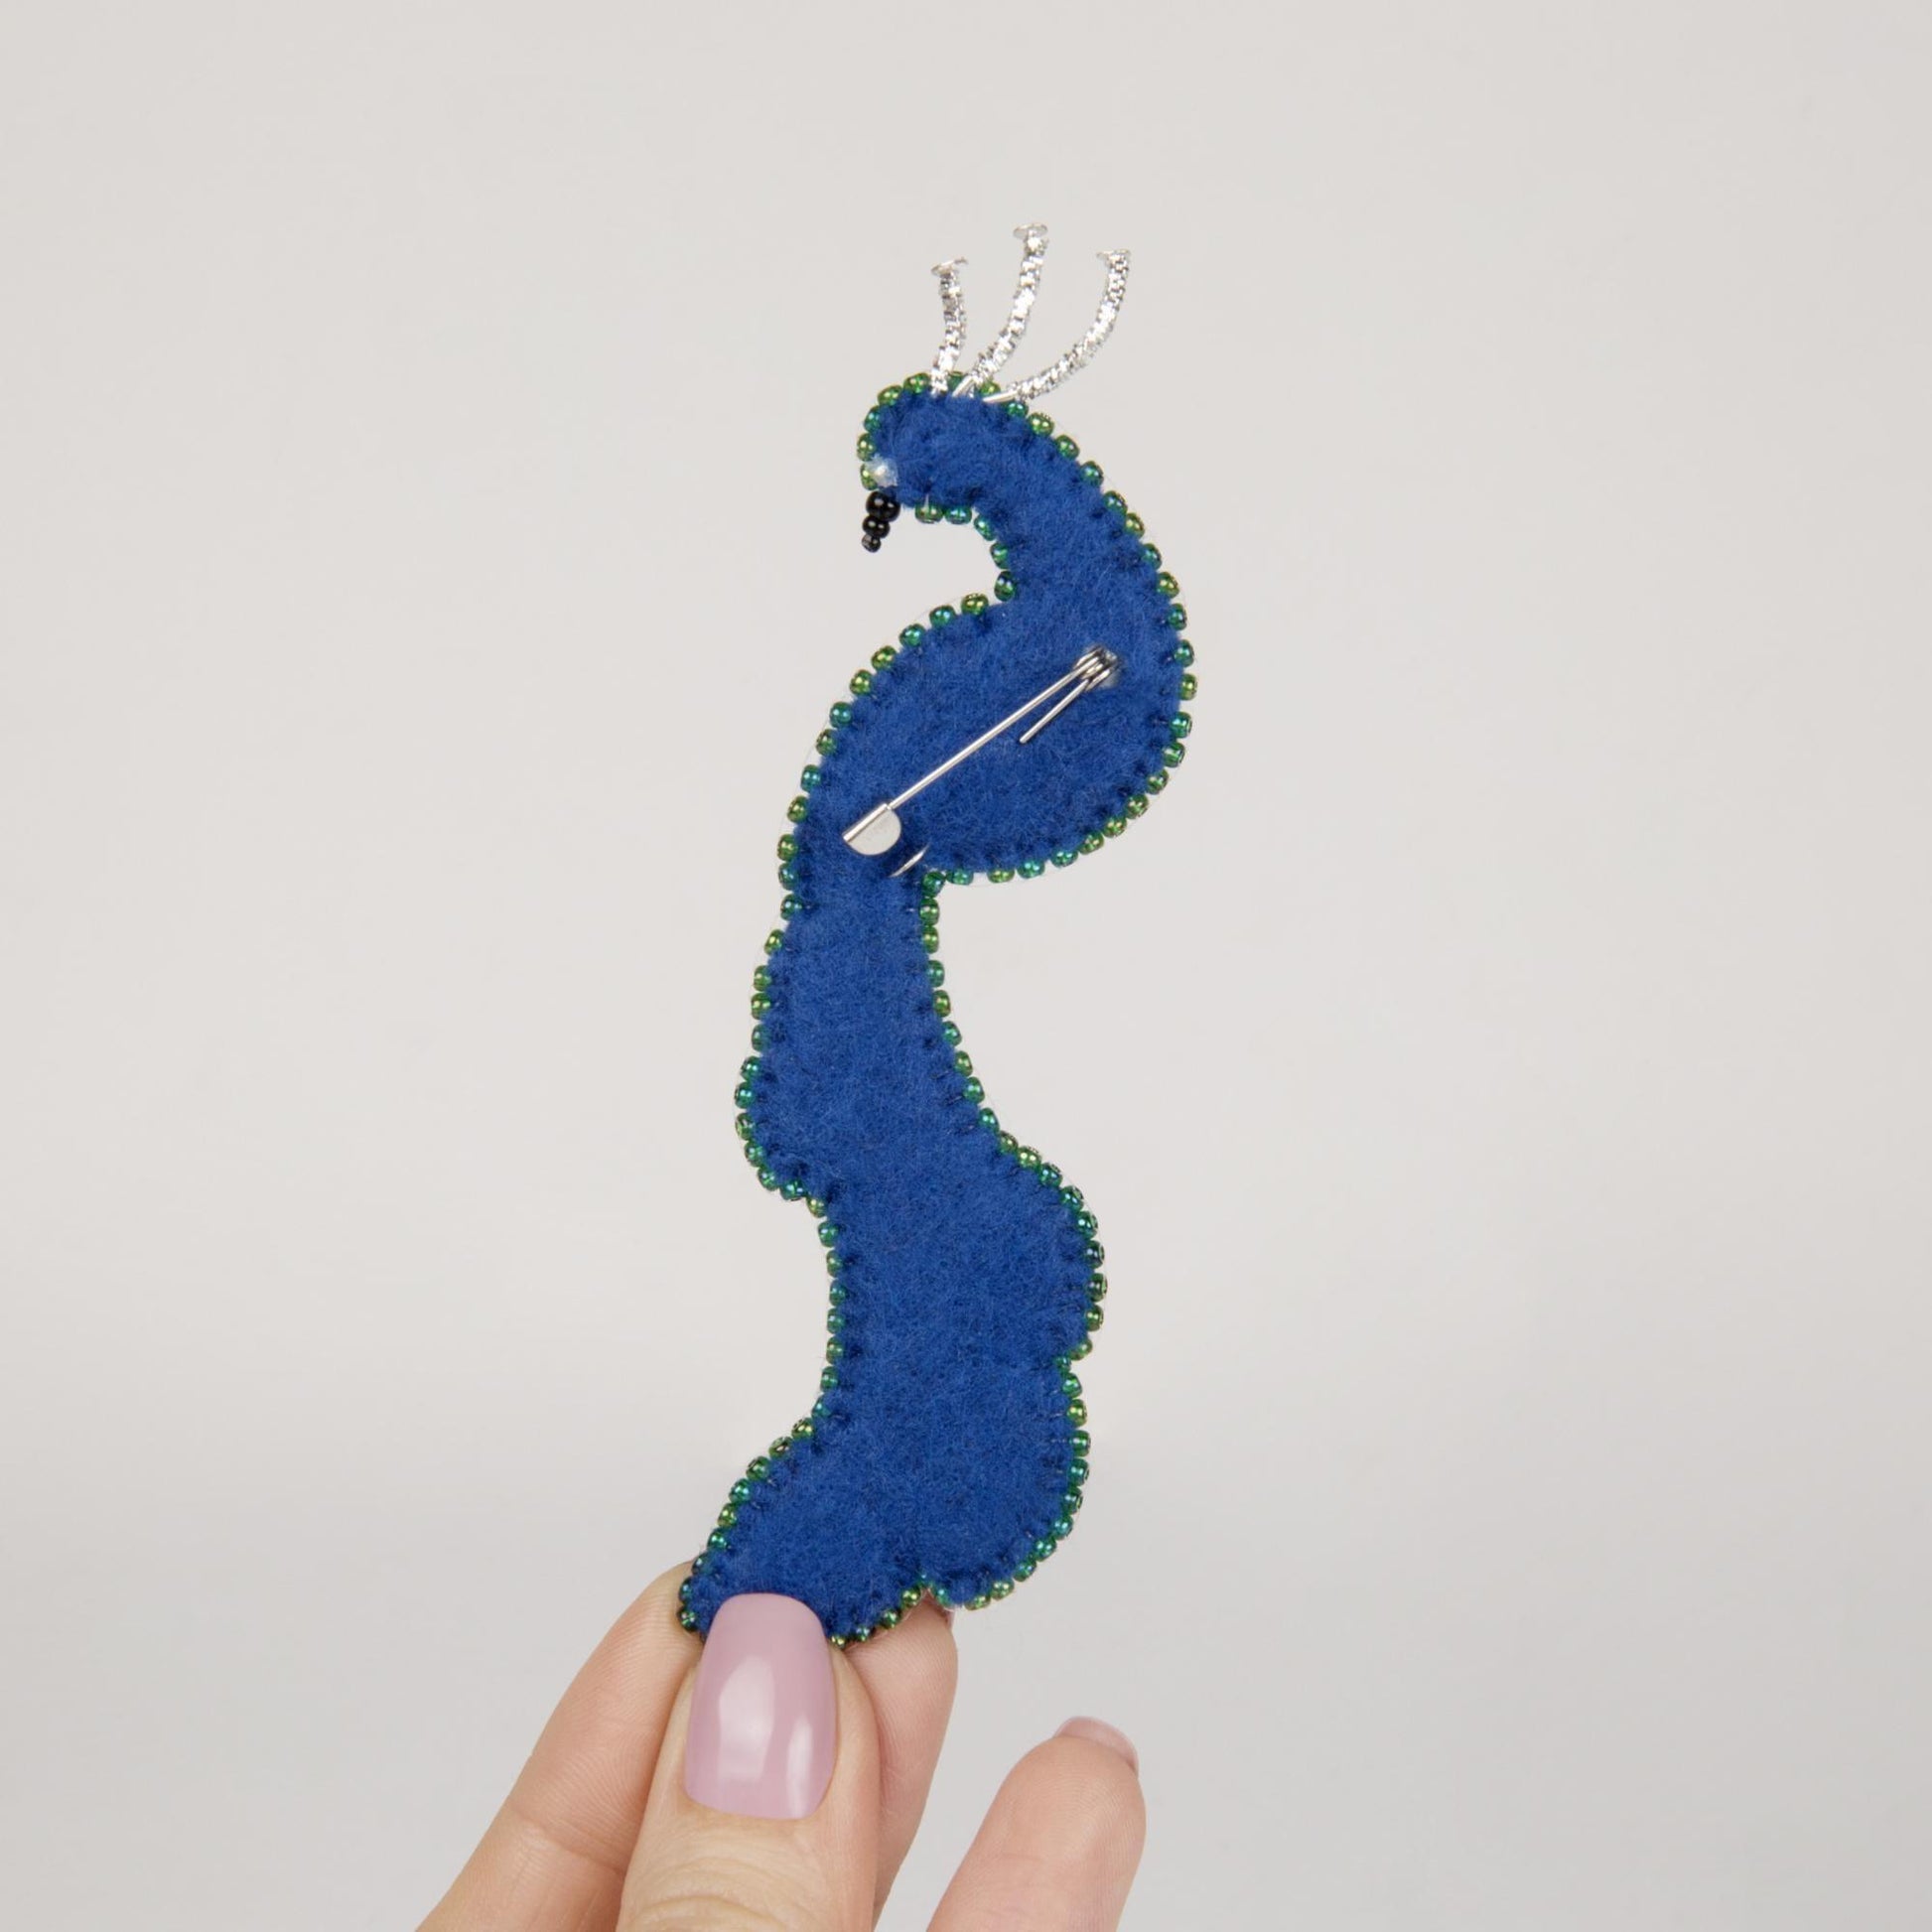 BP-302 Beadwork kit for creating broоch Crystal Art "The Bird of Happiness" - Leo Hobby